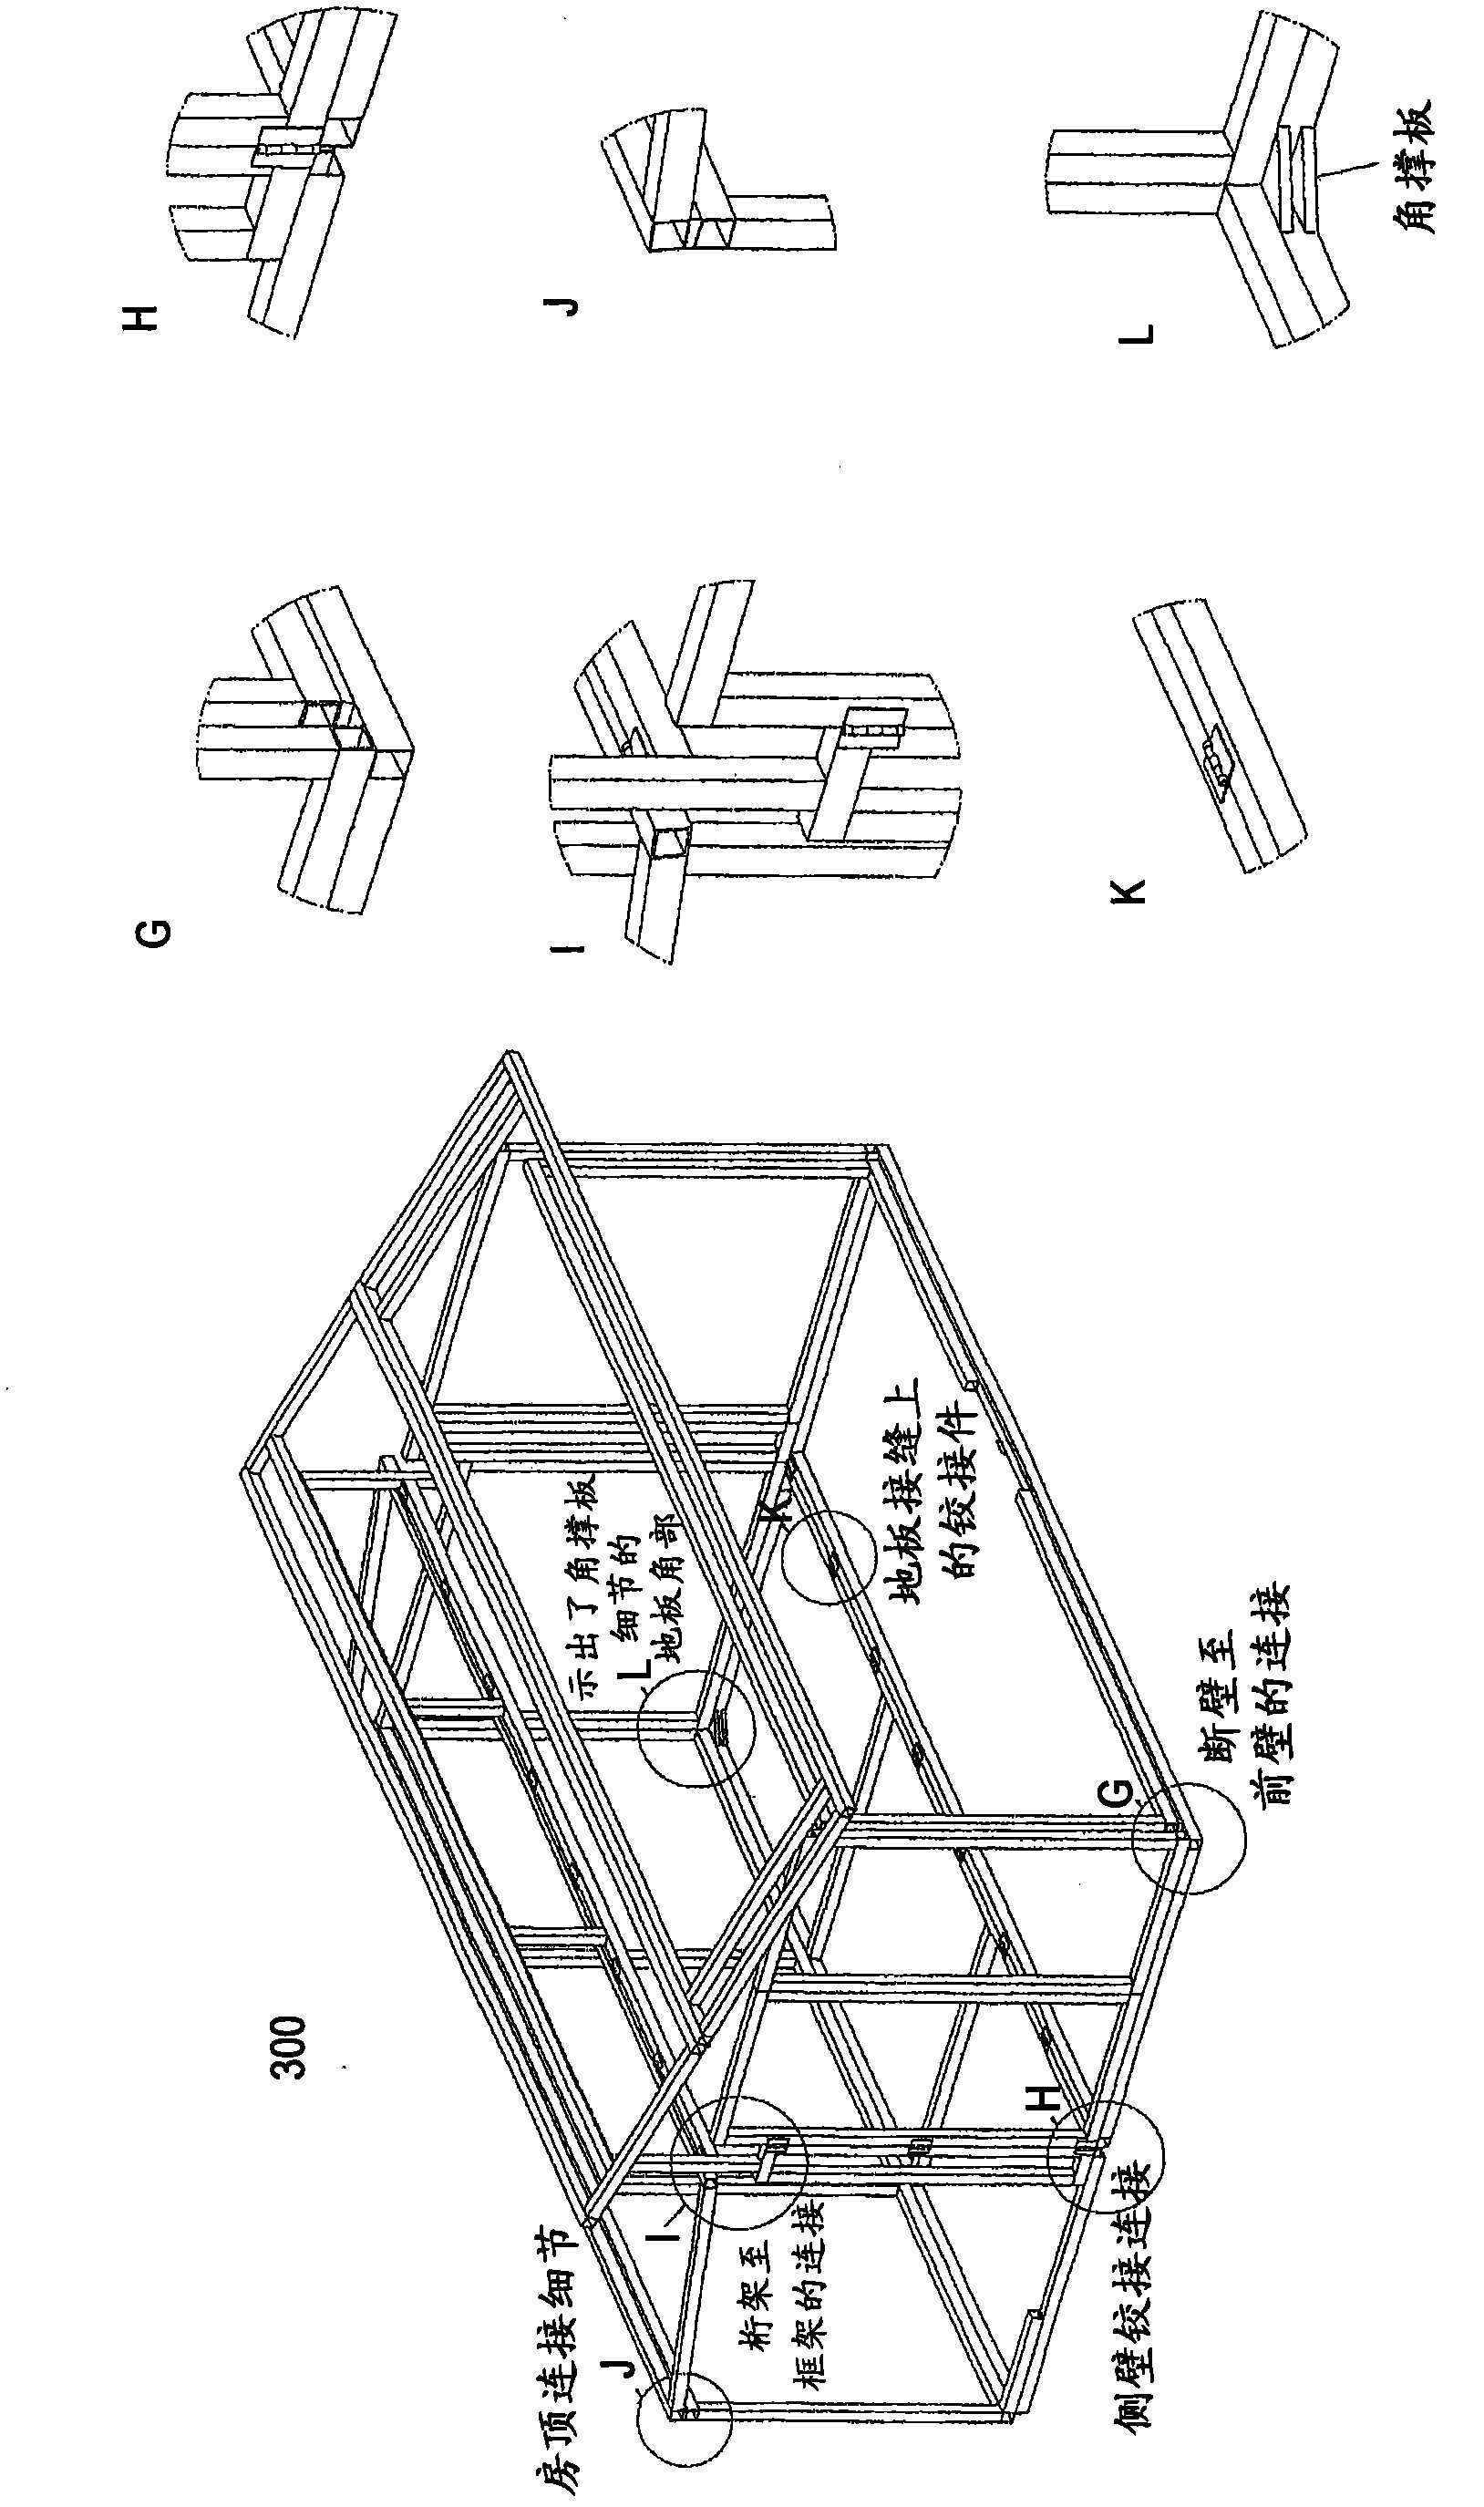 Foldable building units